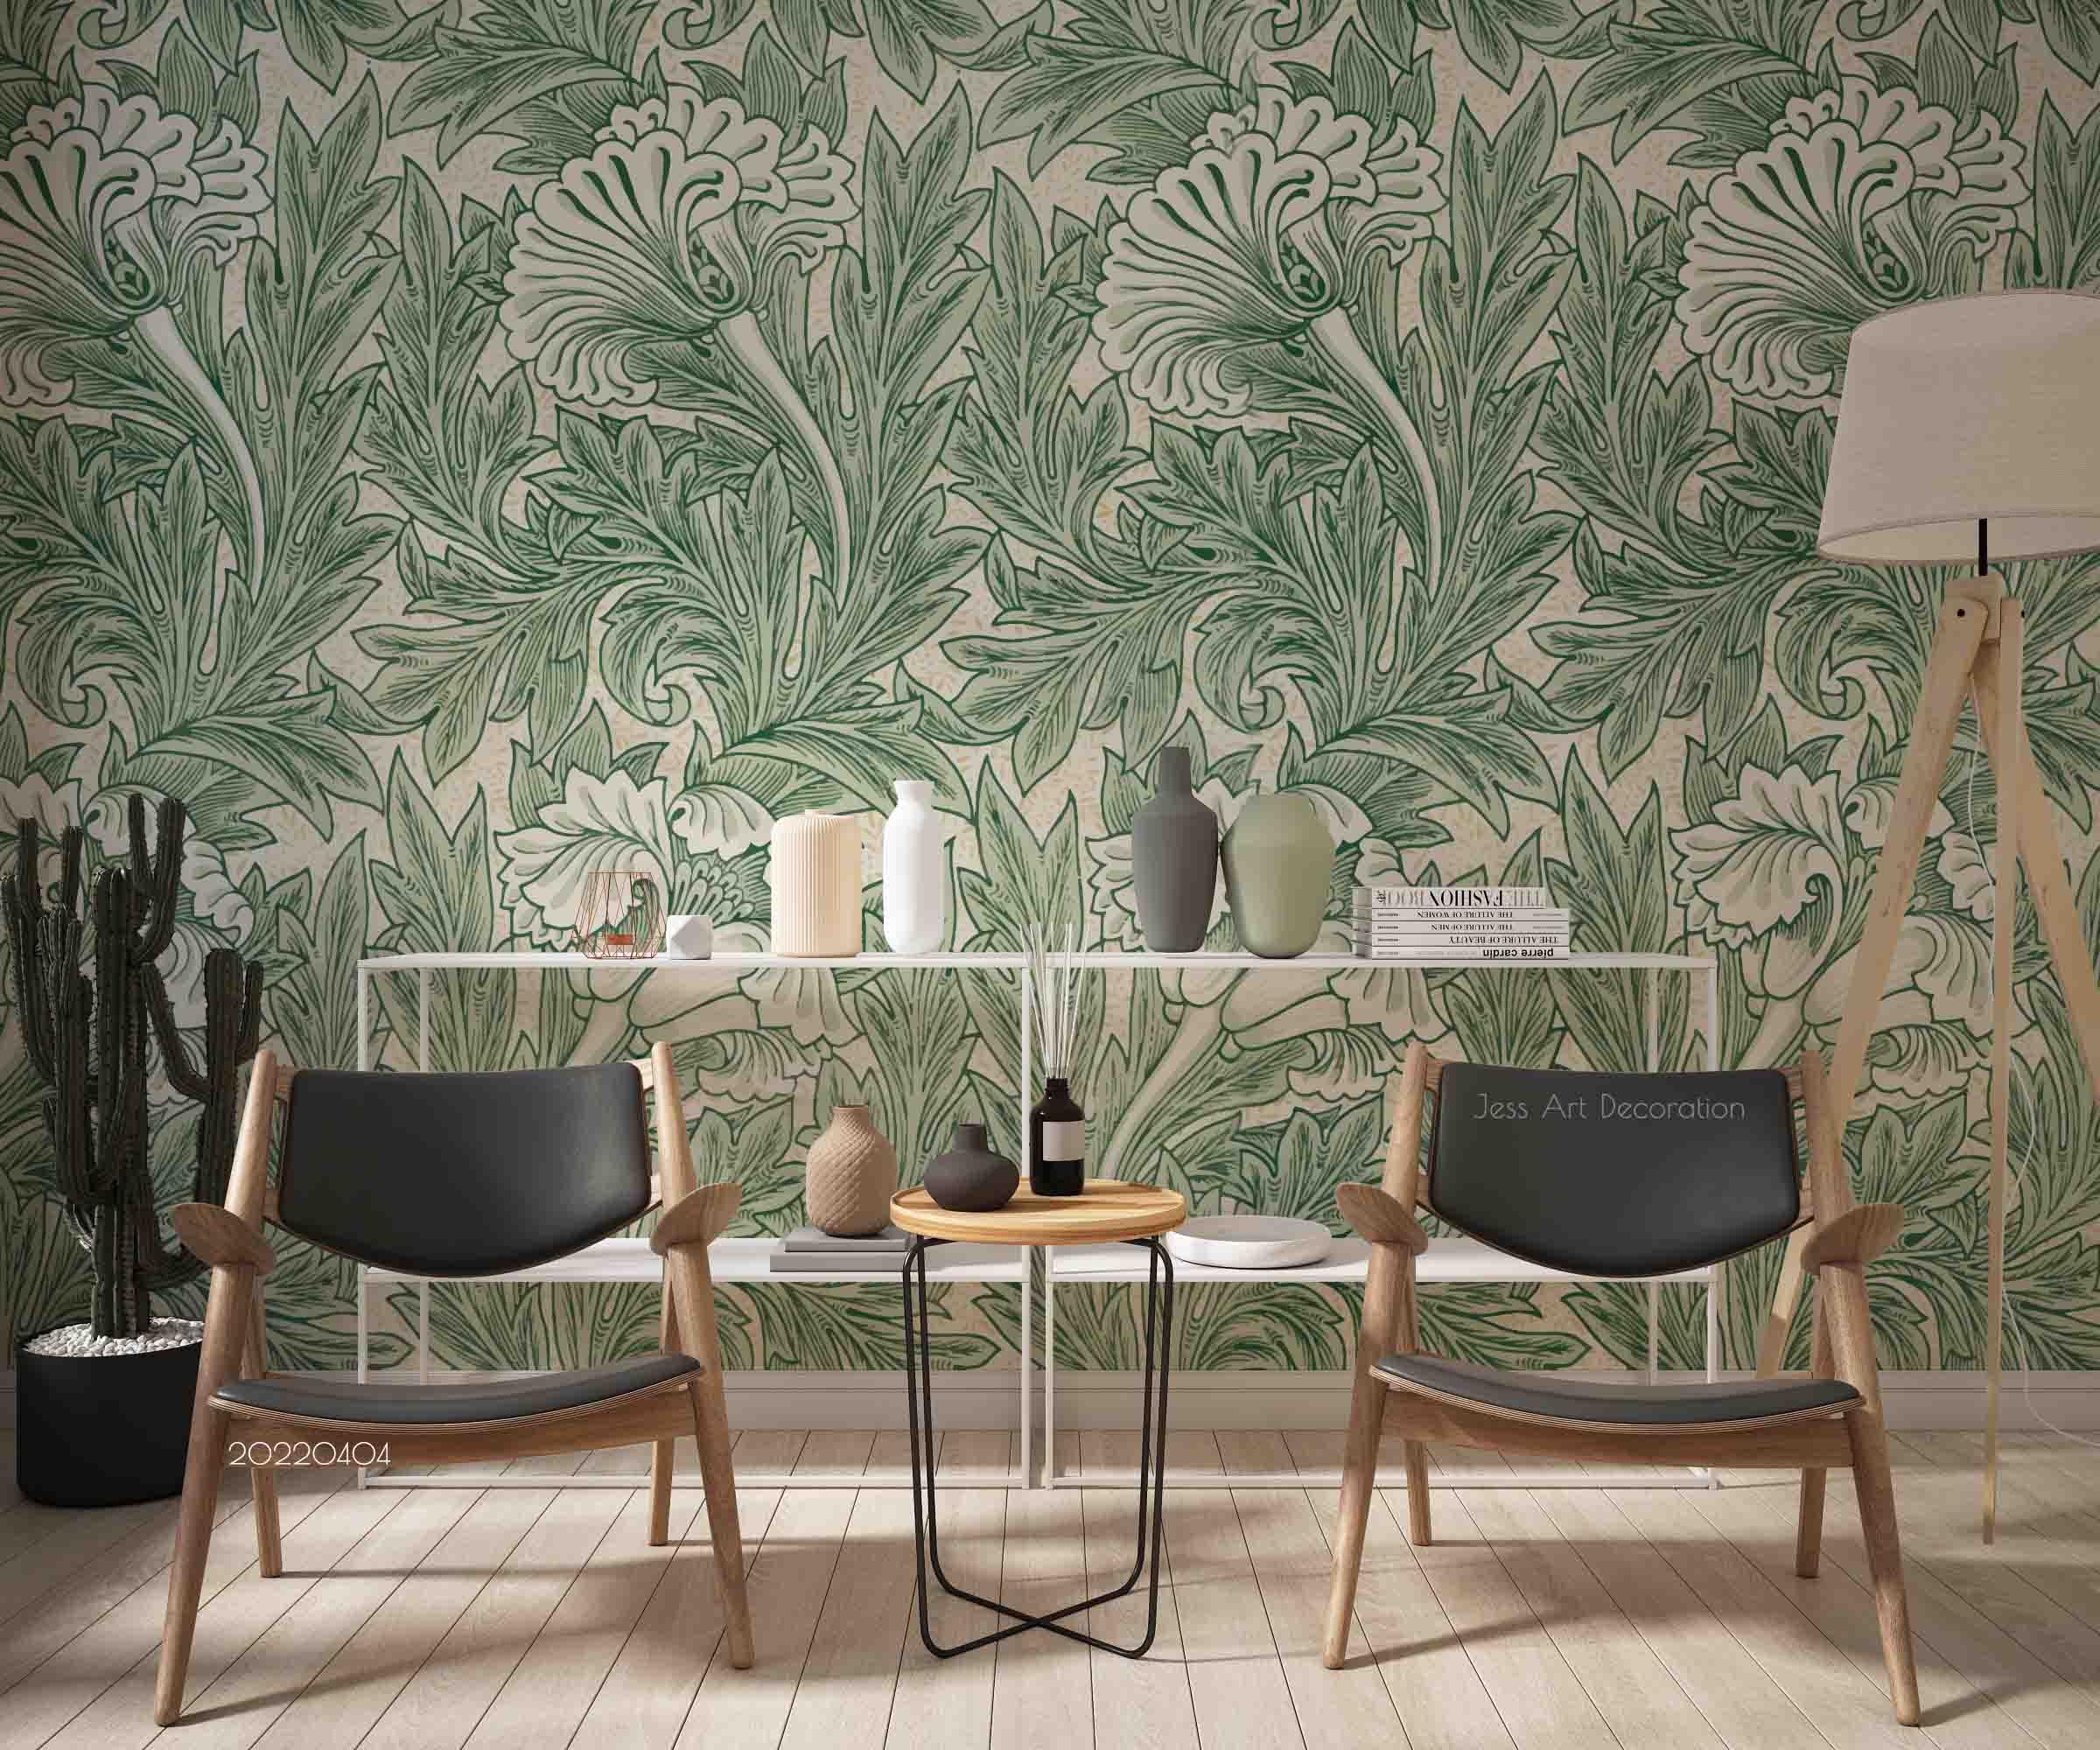 3D Vintage Plant Green Leaf Floral Wall Mural Wallpaper GD 4026- Jess Art Decoration